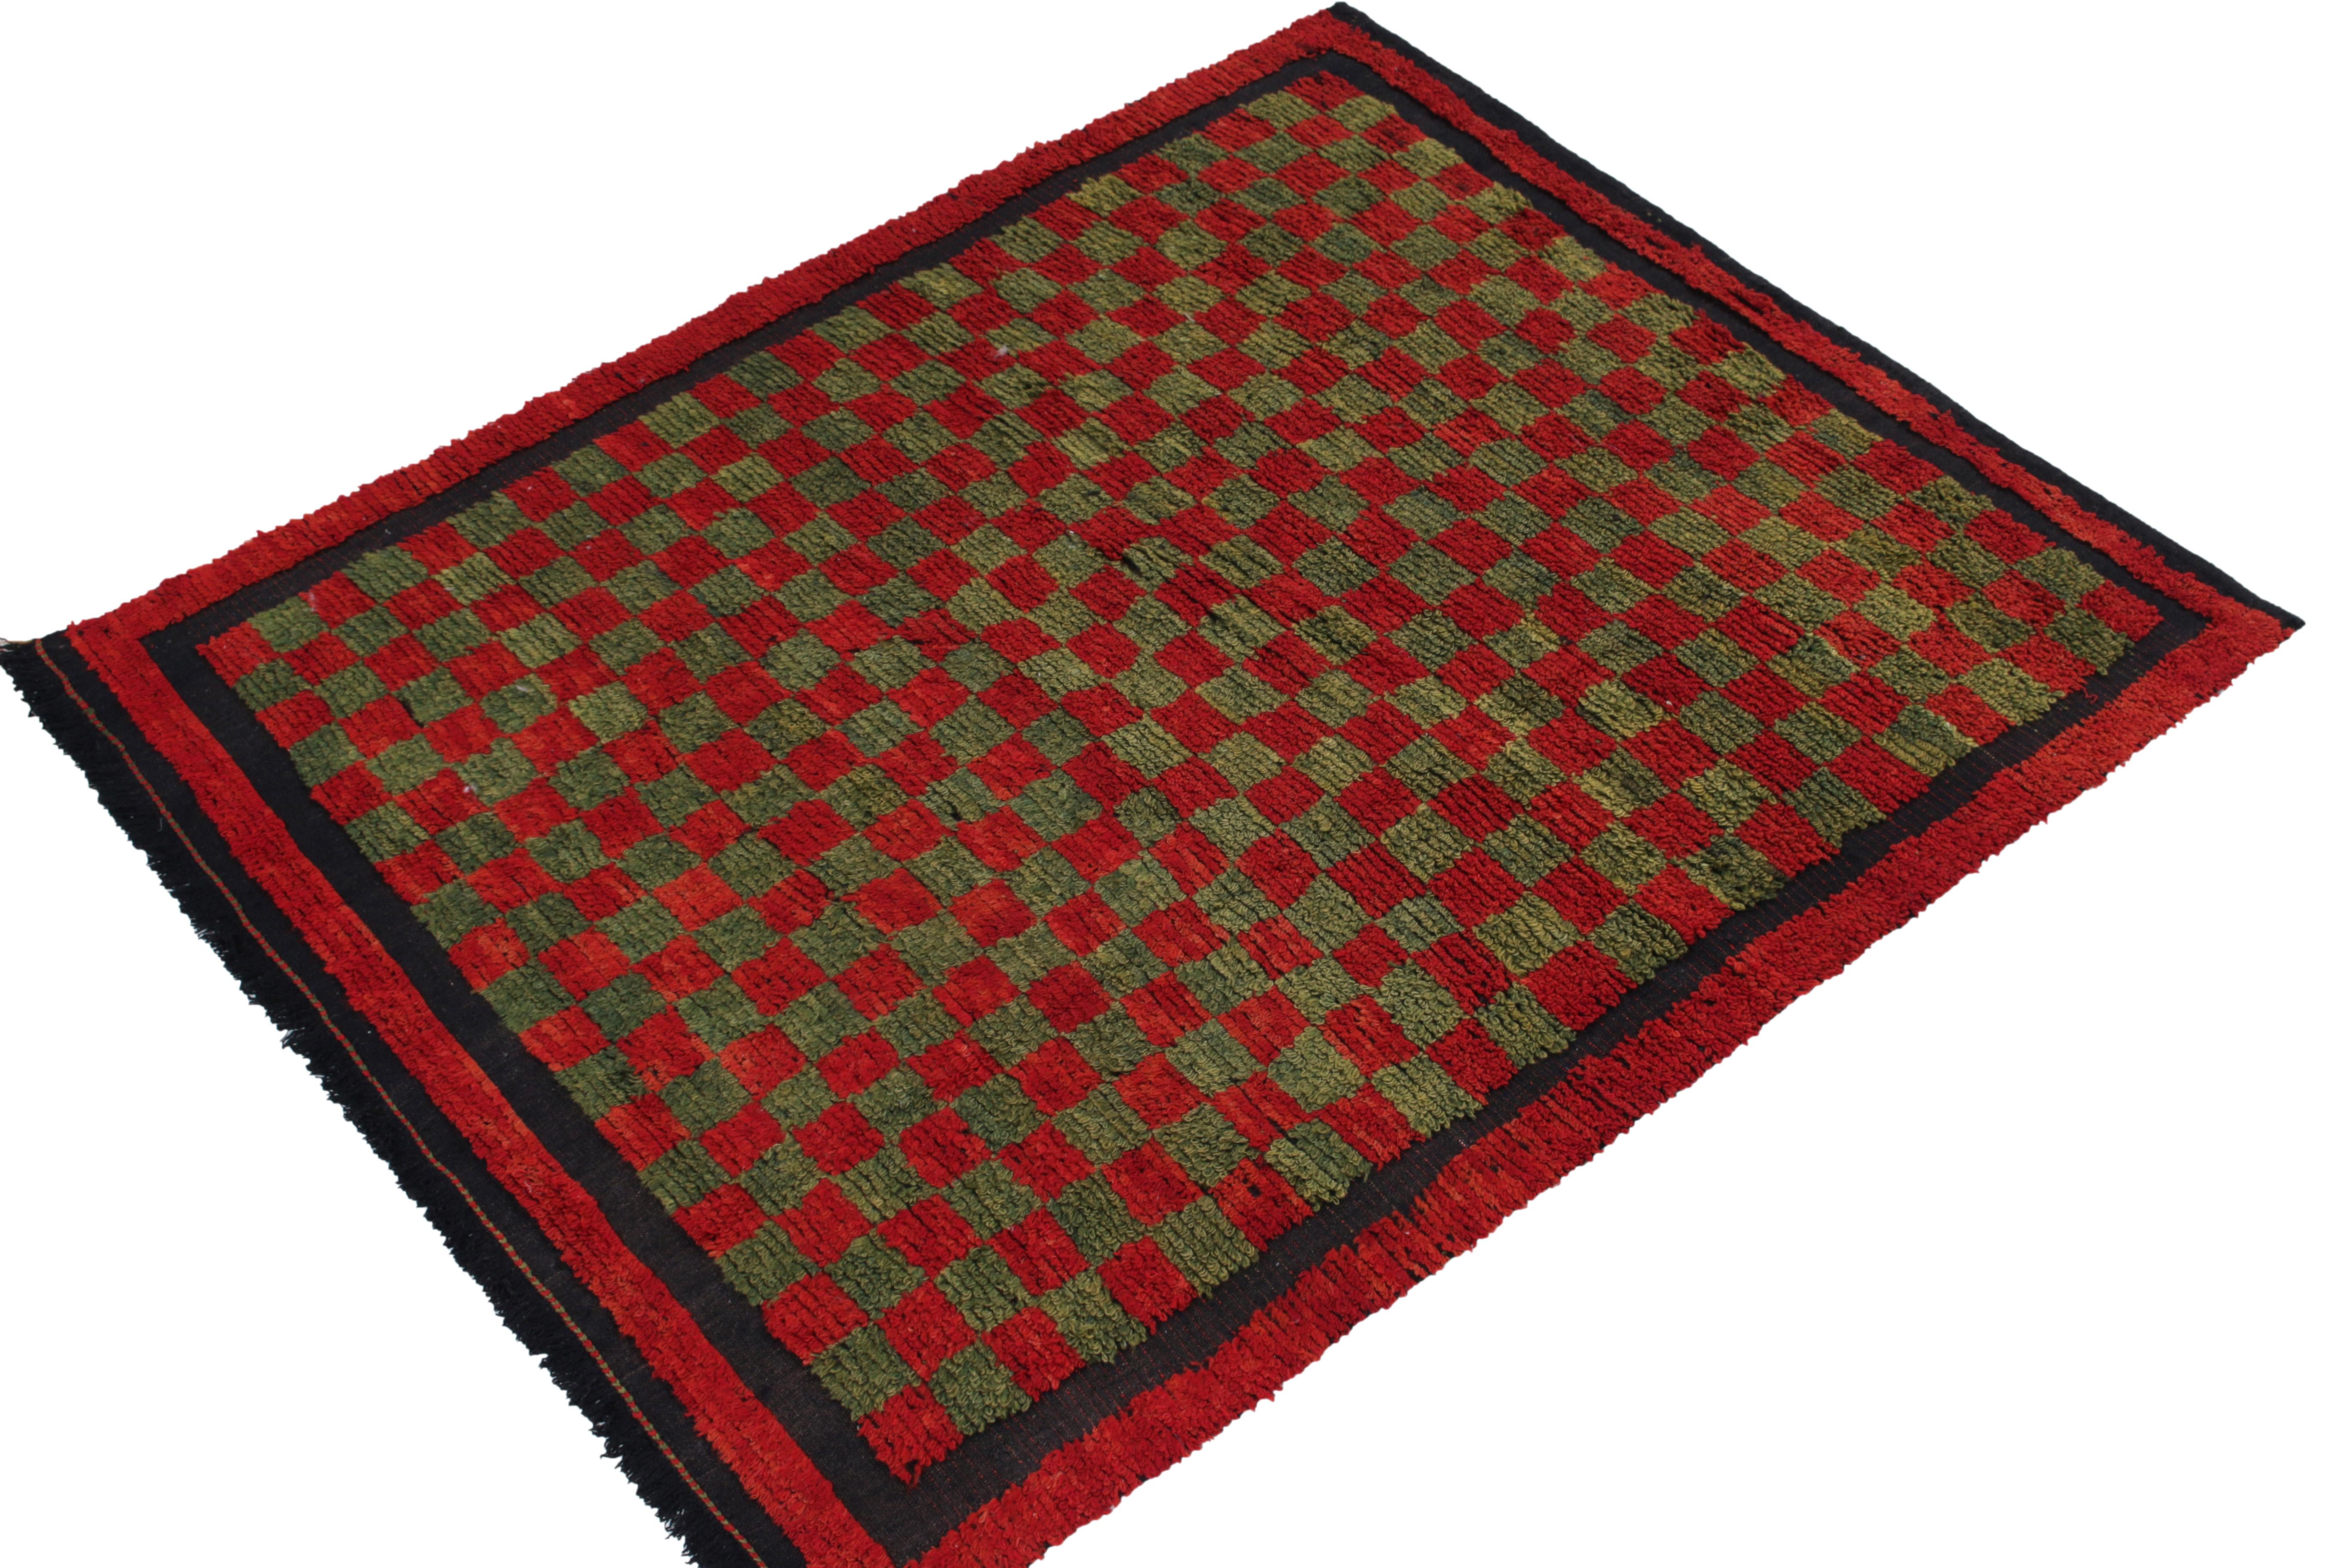 Turkish Vintage Tulu Shag Rug in Red, Green Chessboard Geometric Pattern by Rug & Kilim For Sale